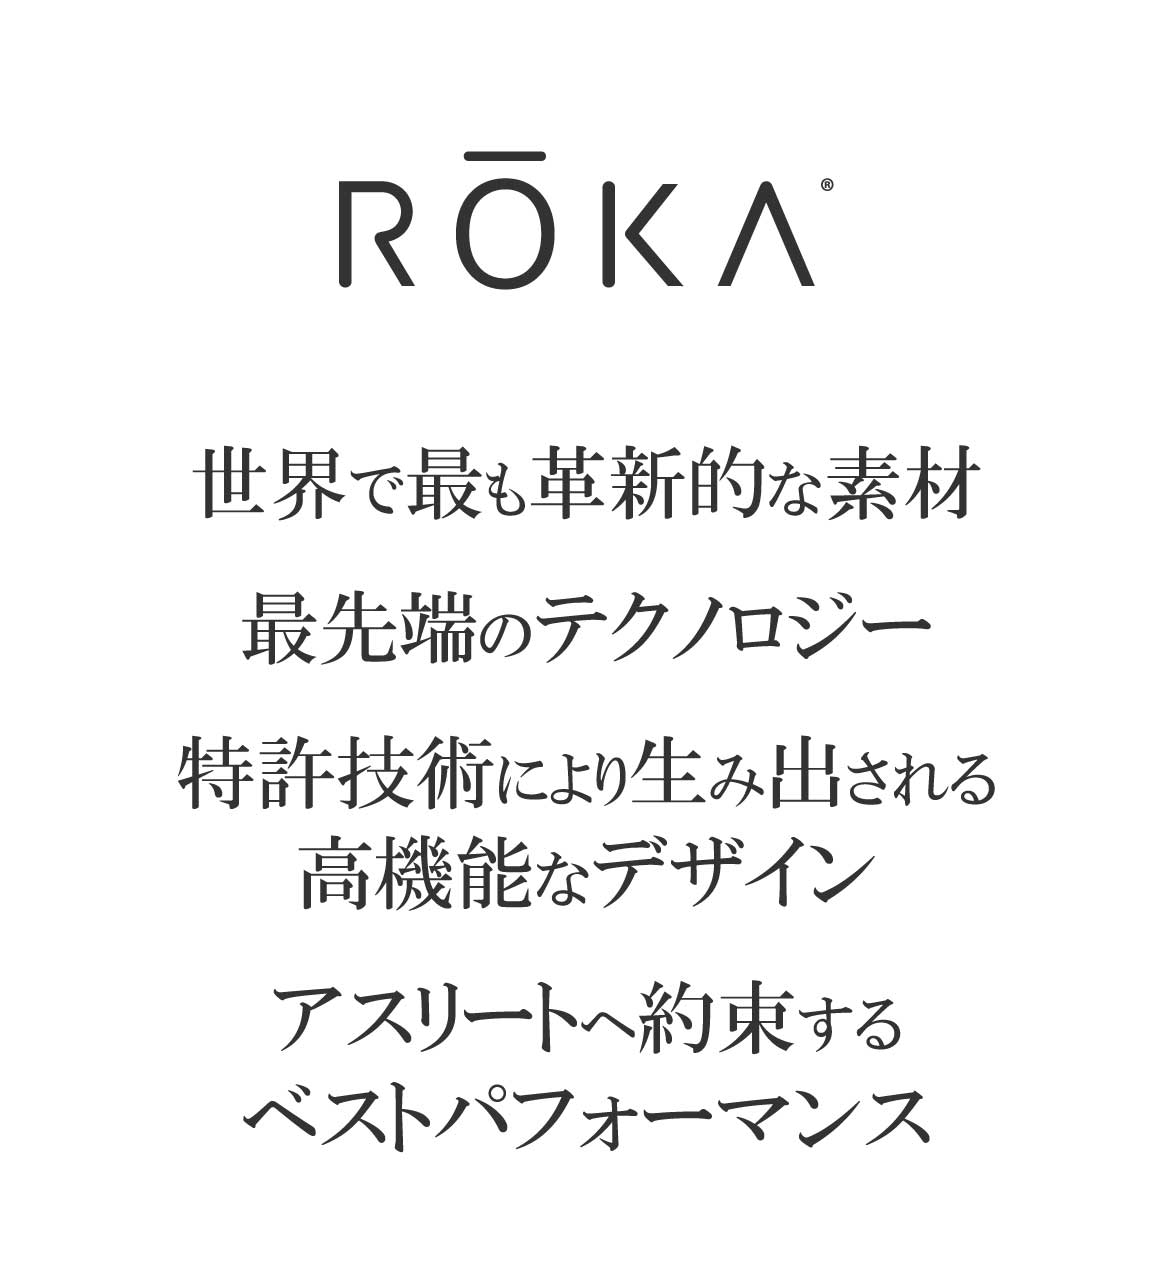 Rokaは革新的・最先端・高性能な製品をアスリートへ